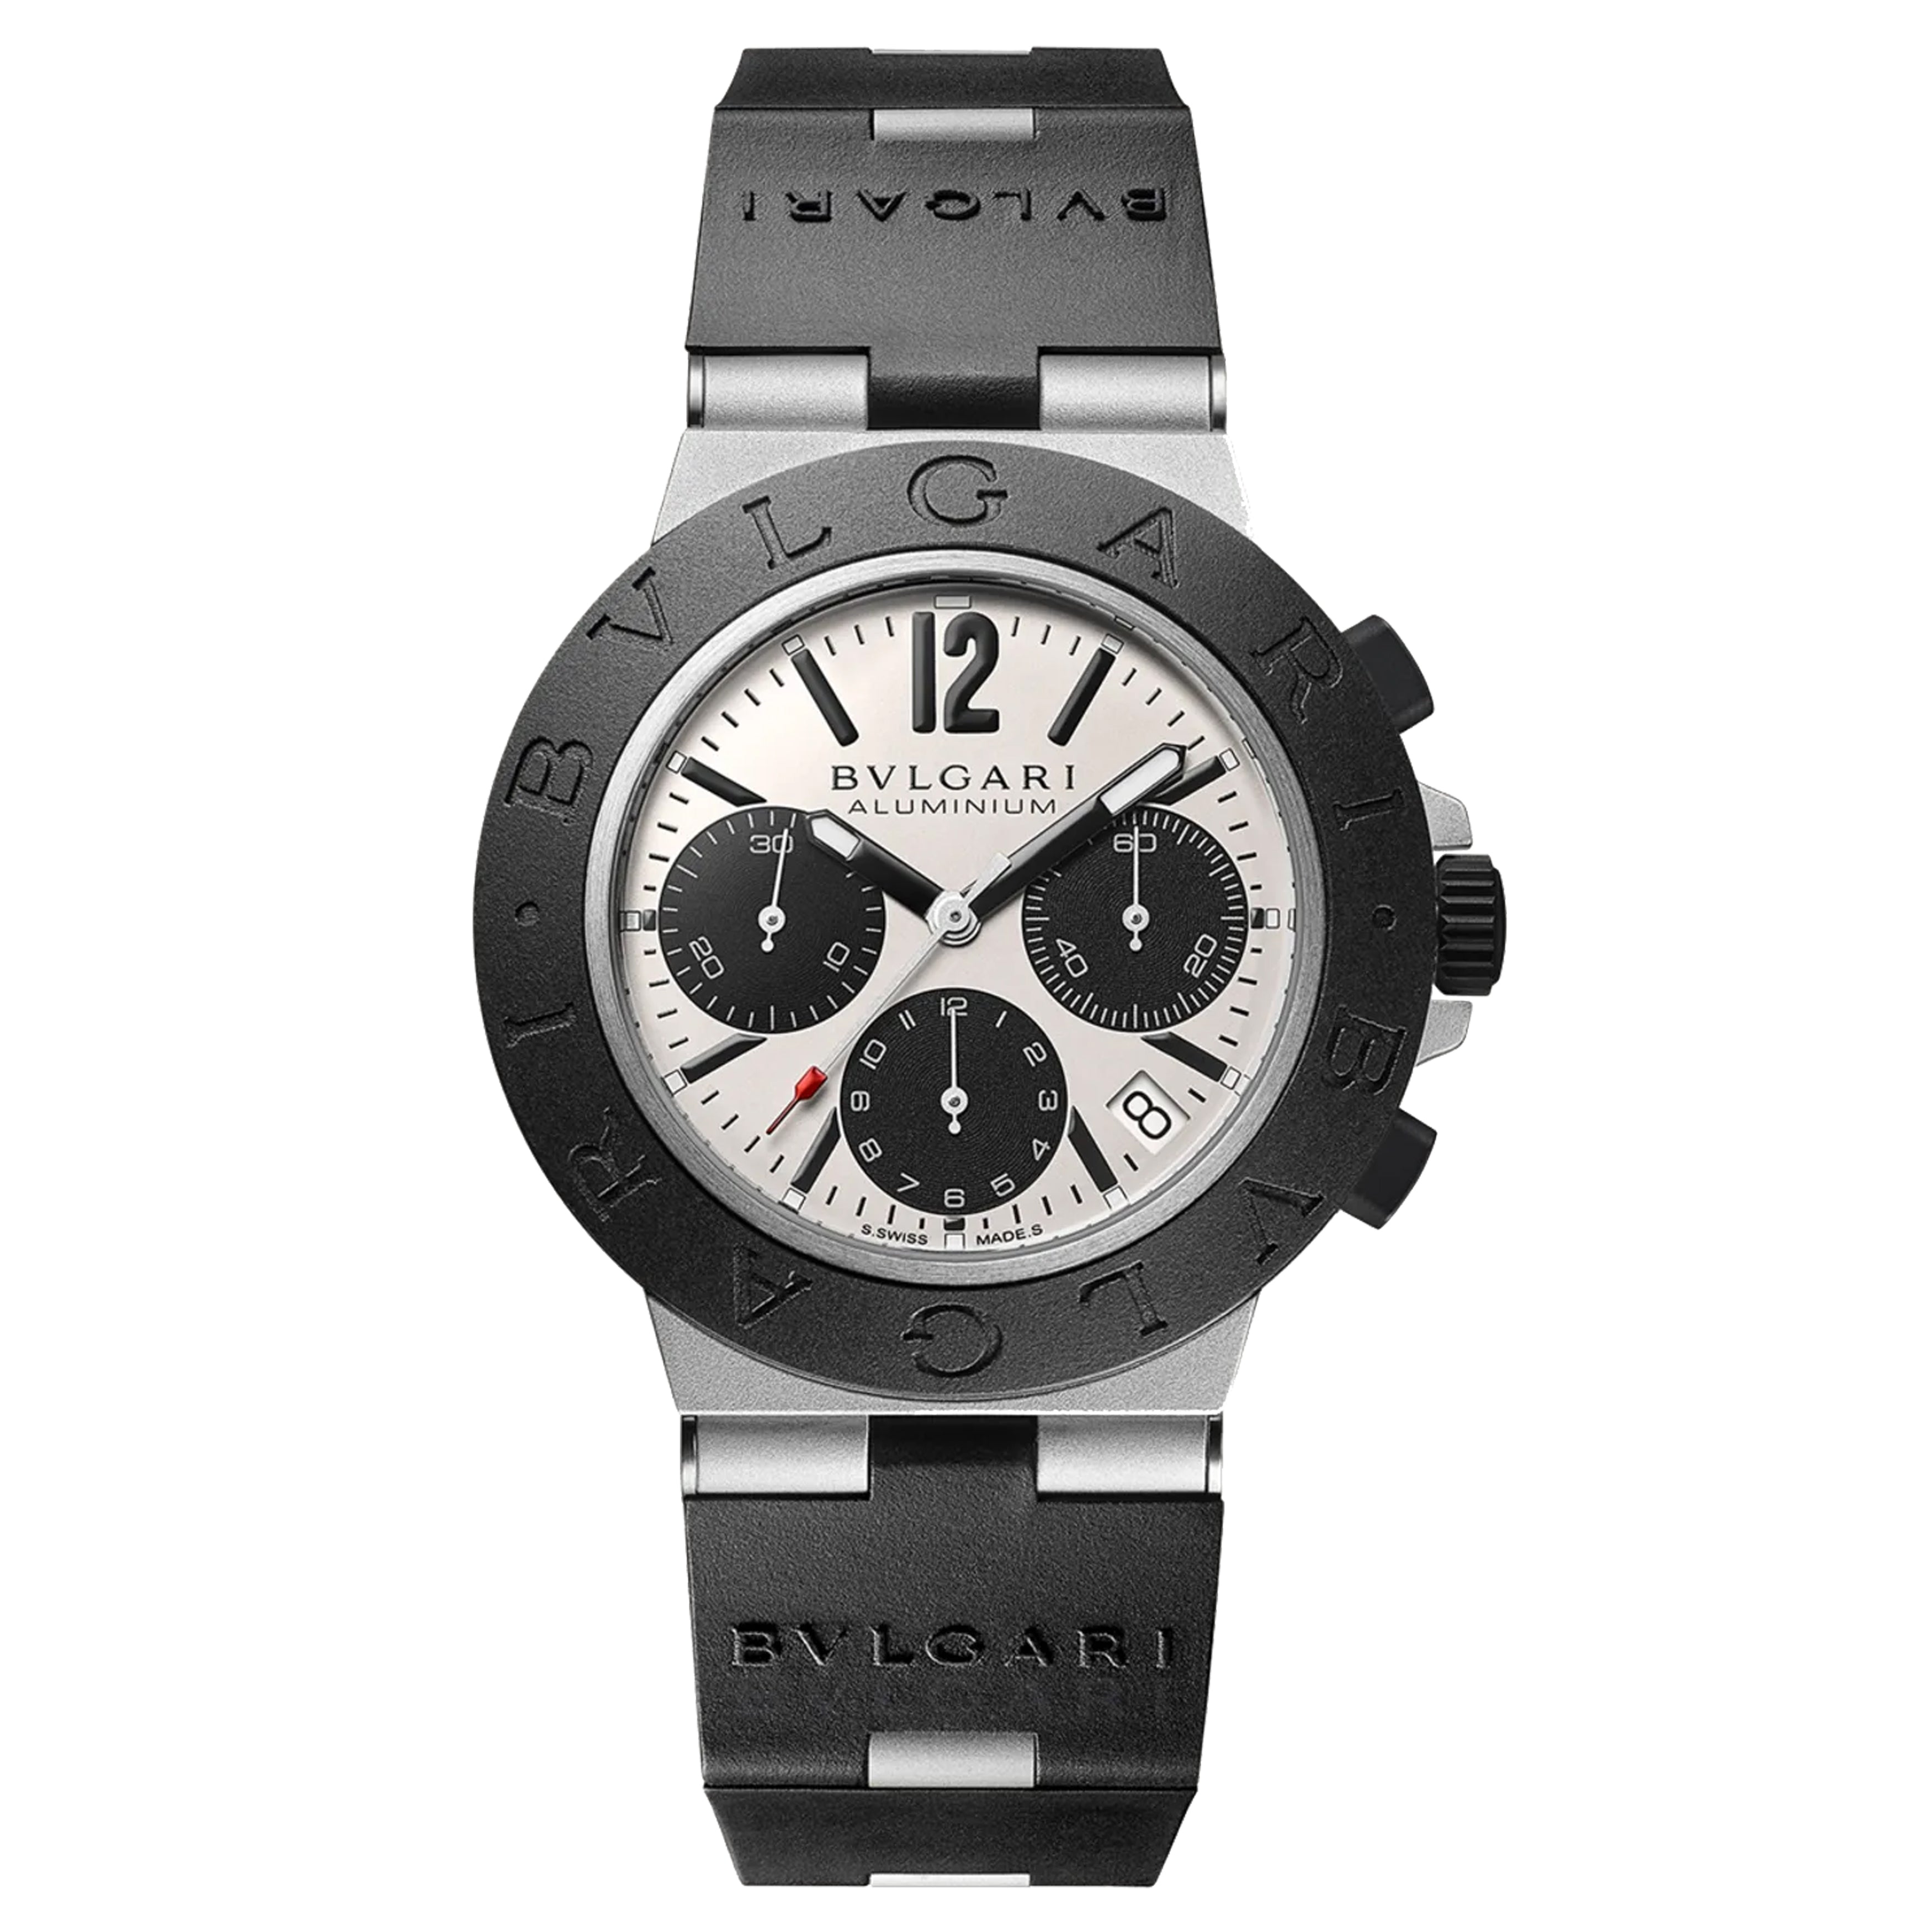 Bulgari Aluminium Chronograph Watch, 40mm White Dial, 103383